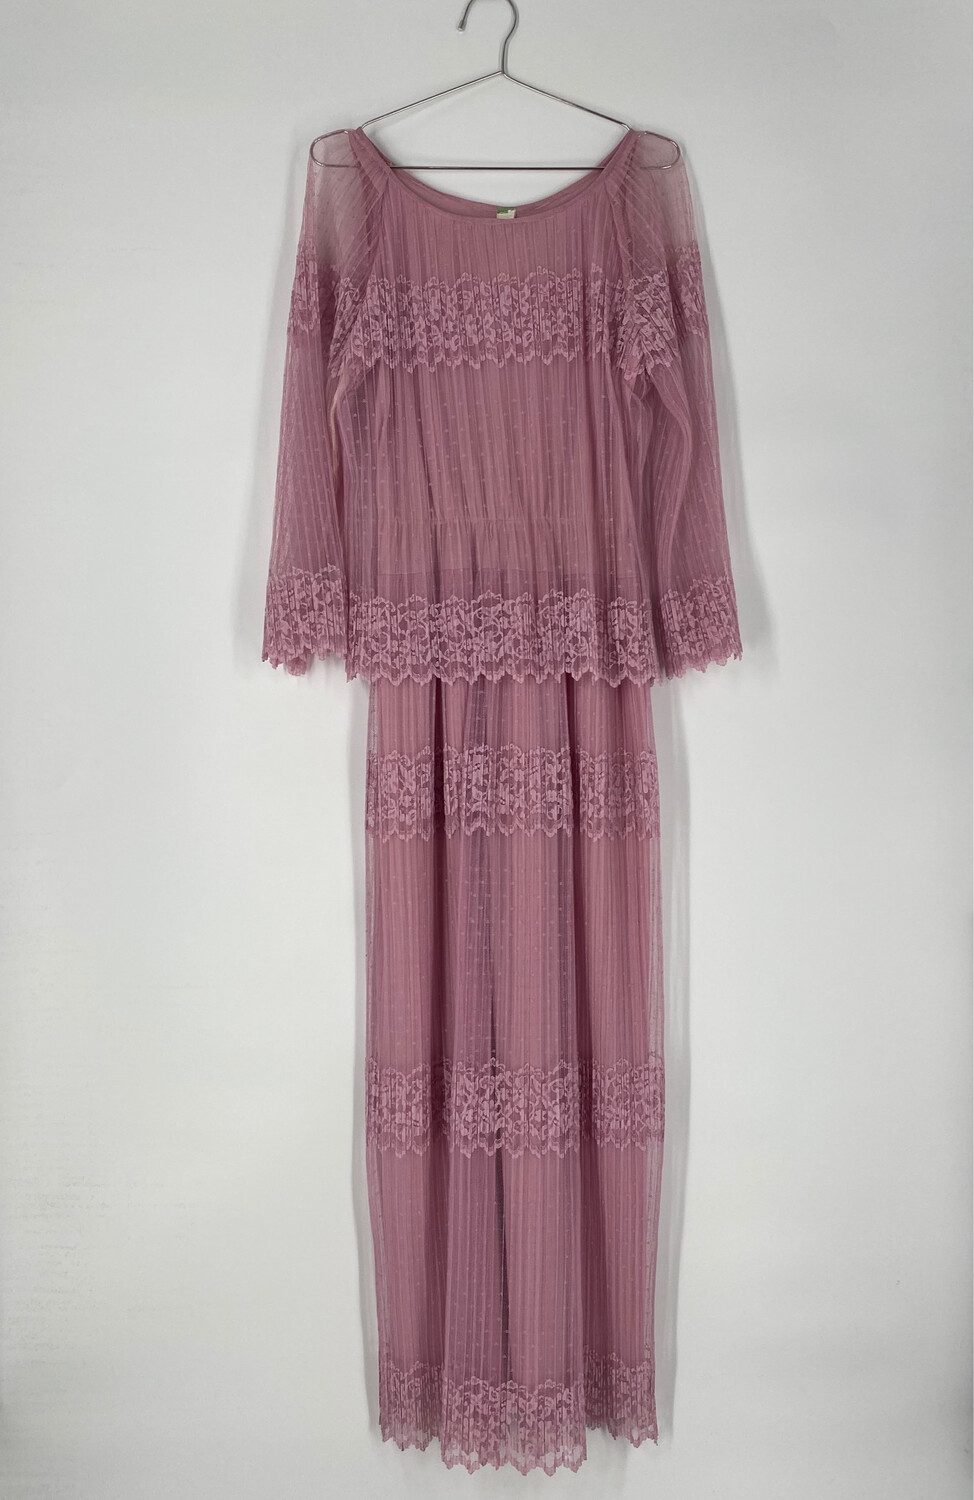 Lace Long Sleeve Maxi Dress Size S